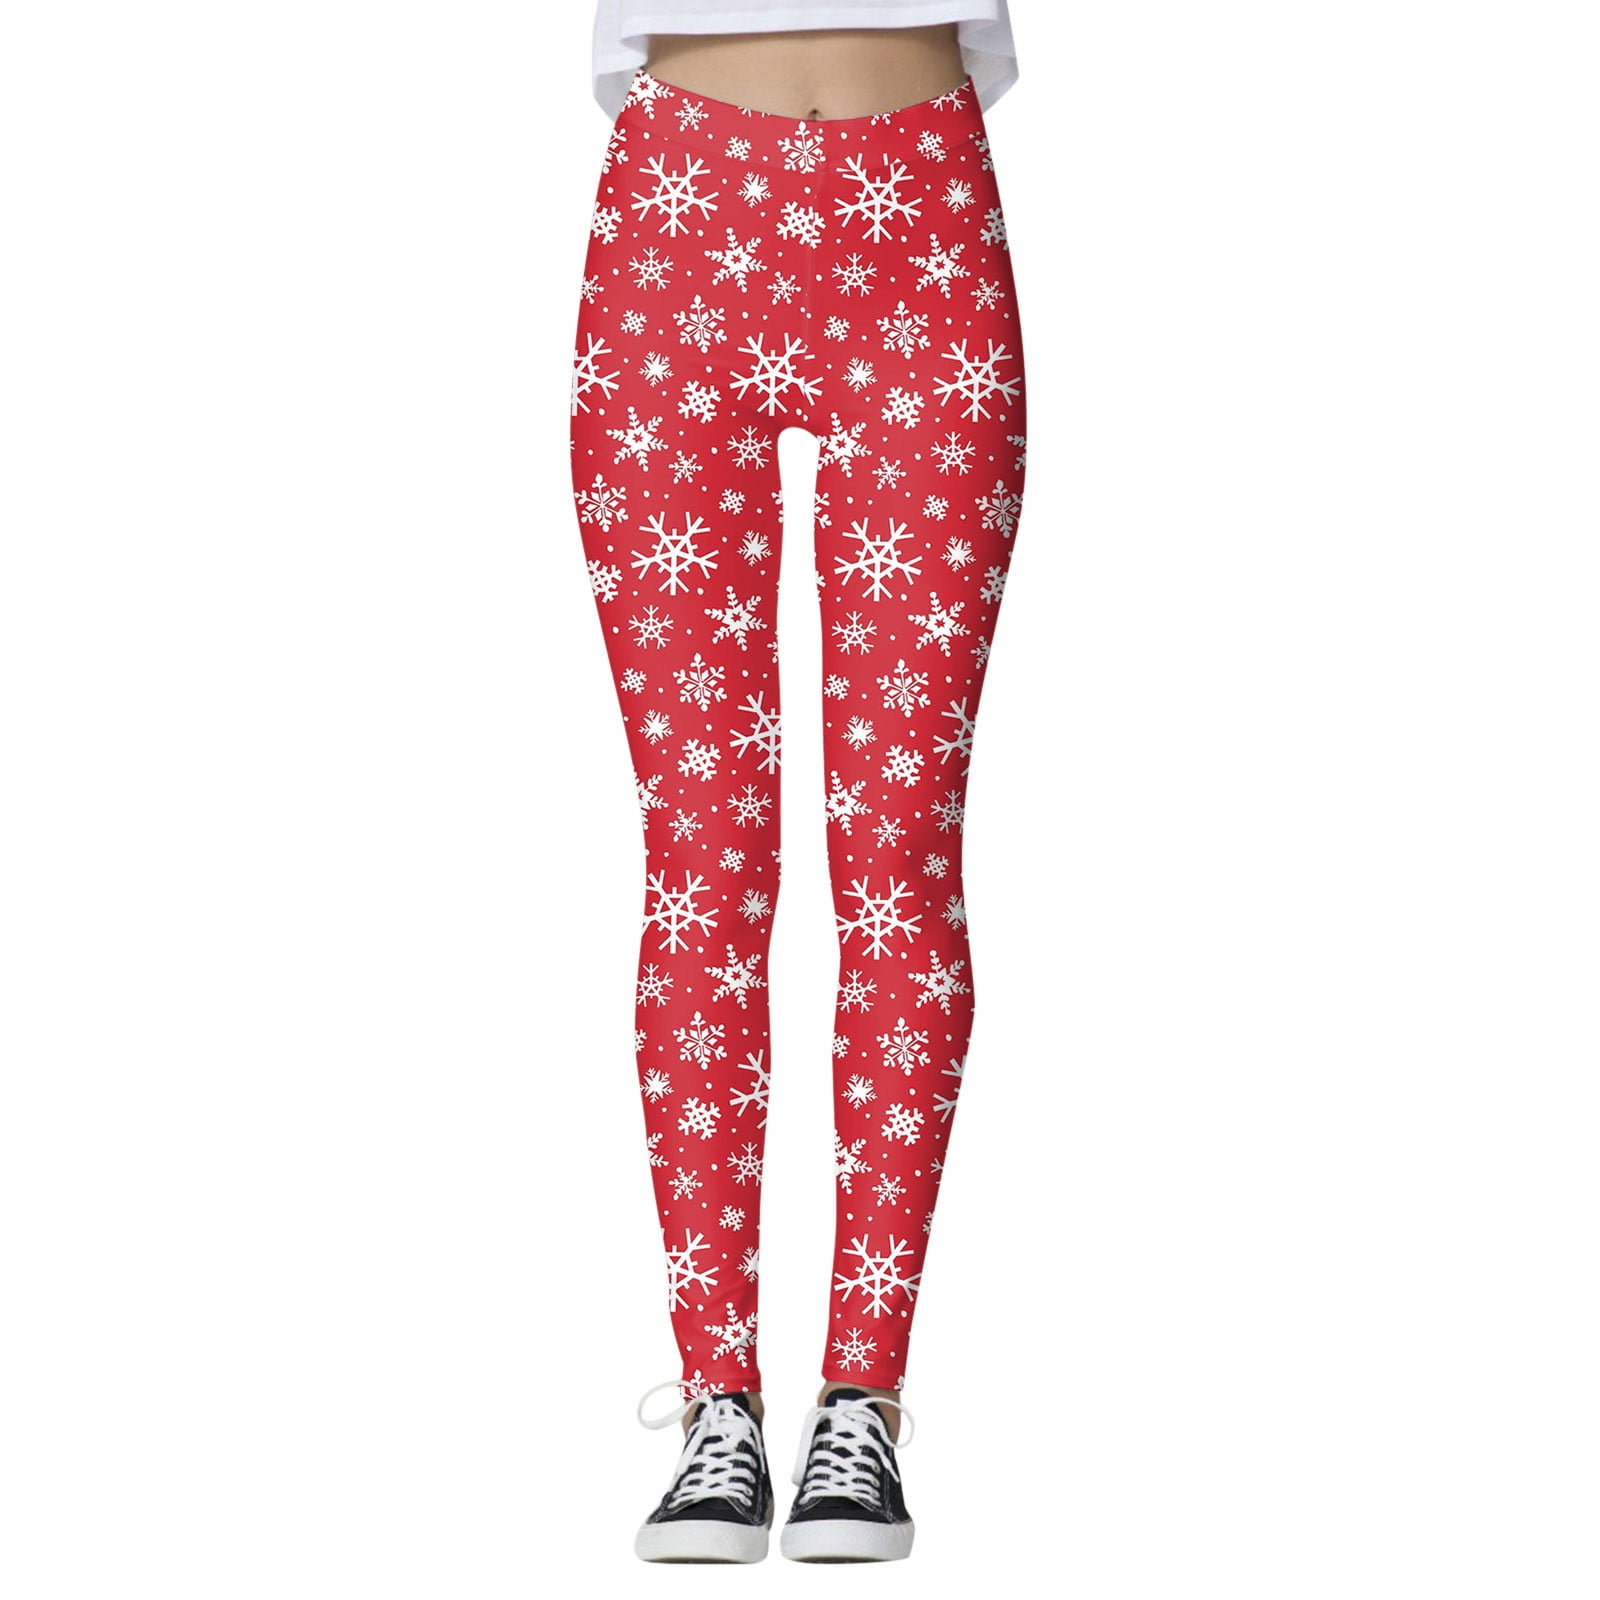 Uuszgmr Leggings For Women Womens Christmas Printed Pants Skinny ...